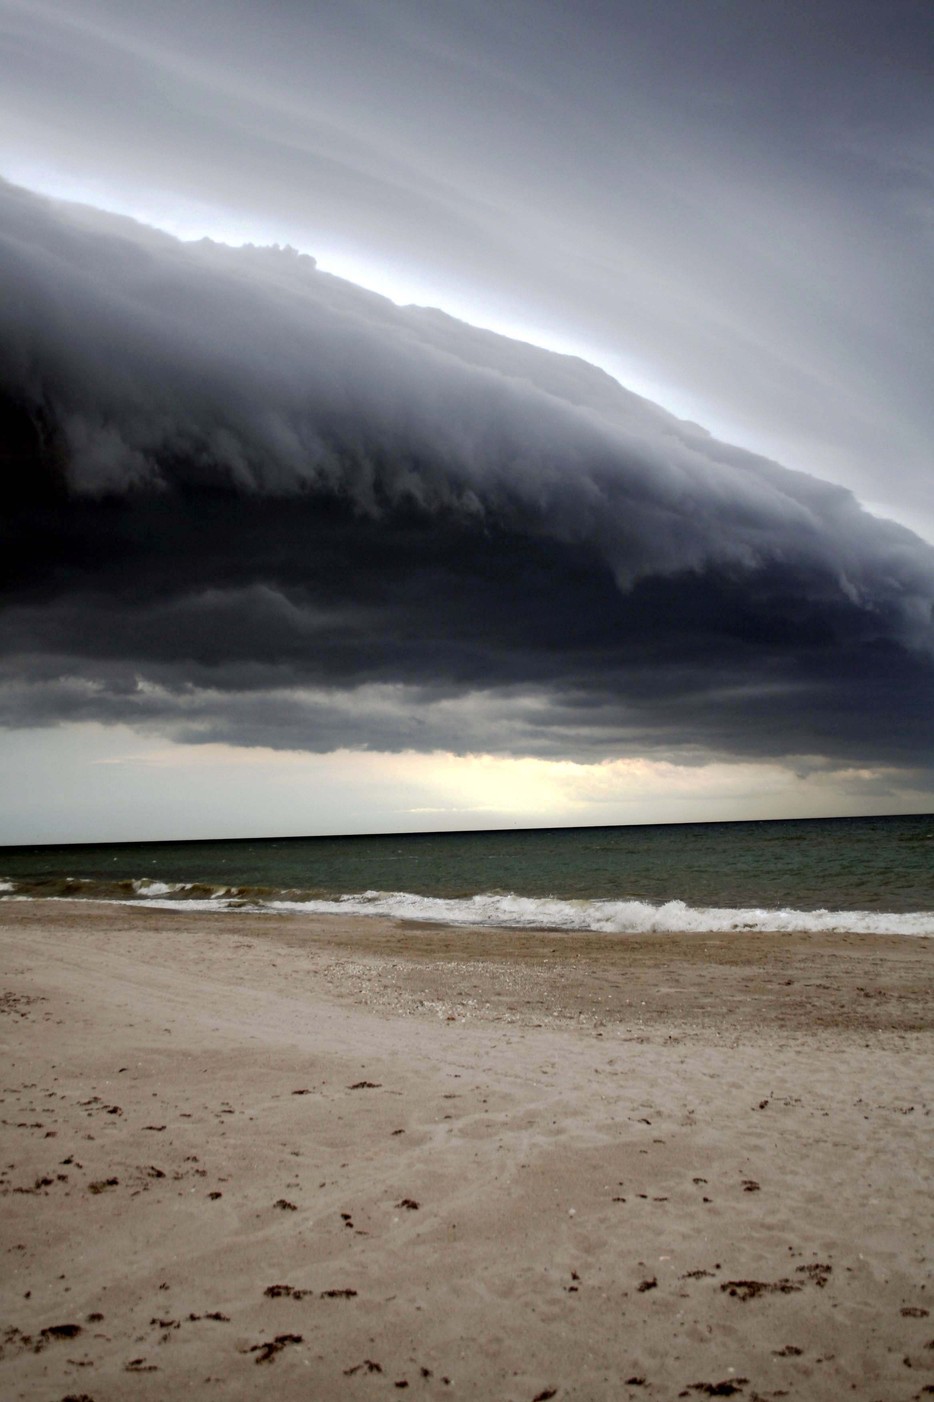 Indialantic, FL: Summer storm rolling into Indialantic Fl.